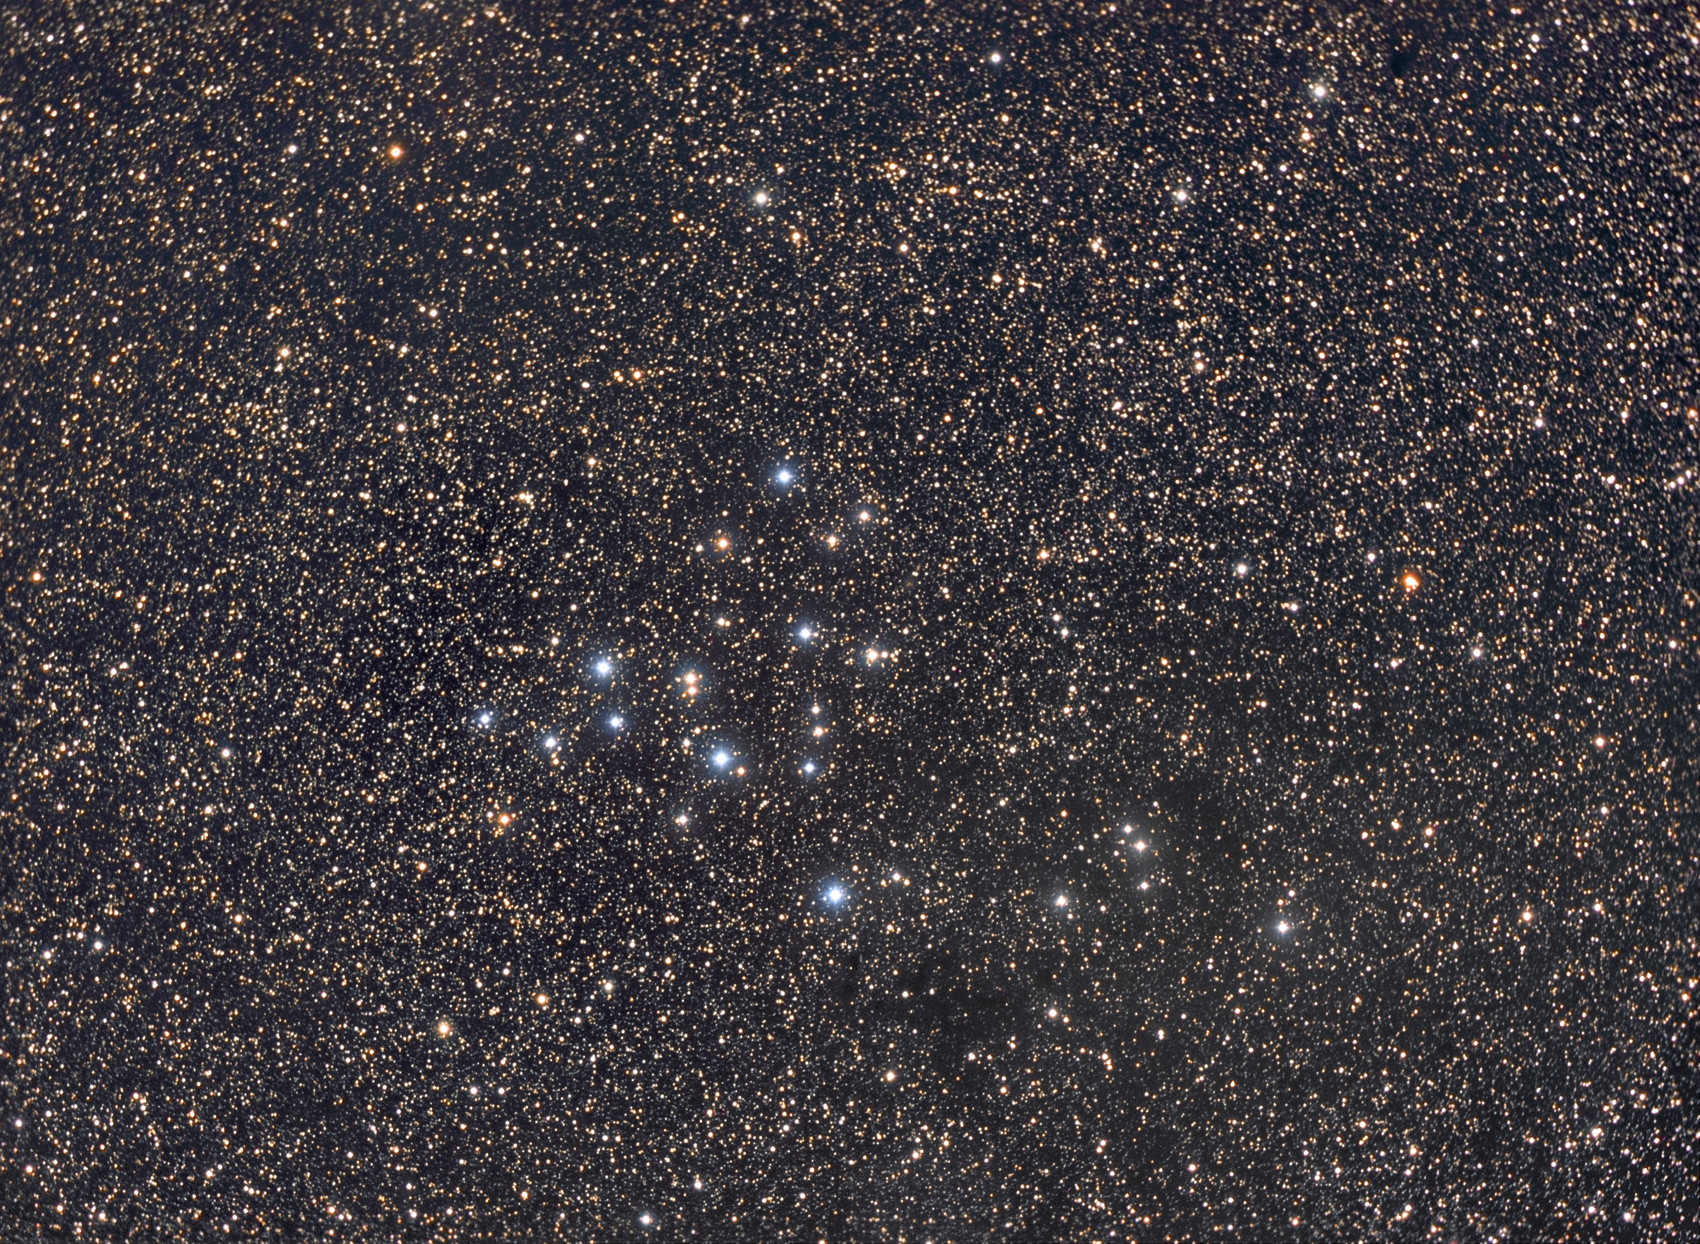 Collider 399 in Constellation Vulpecula